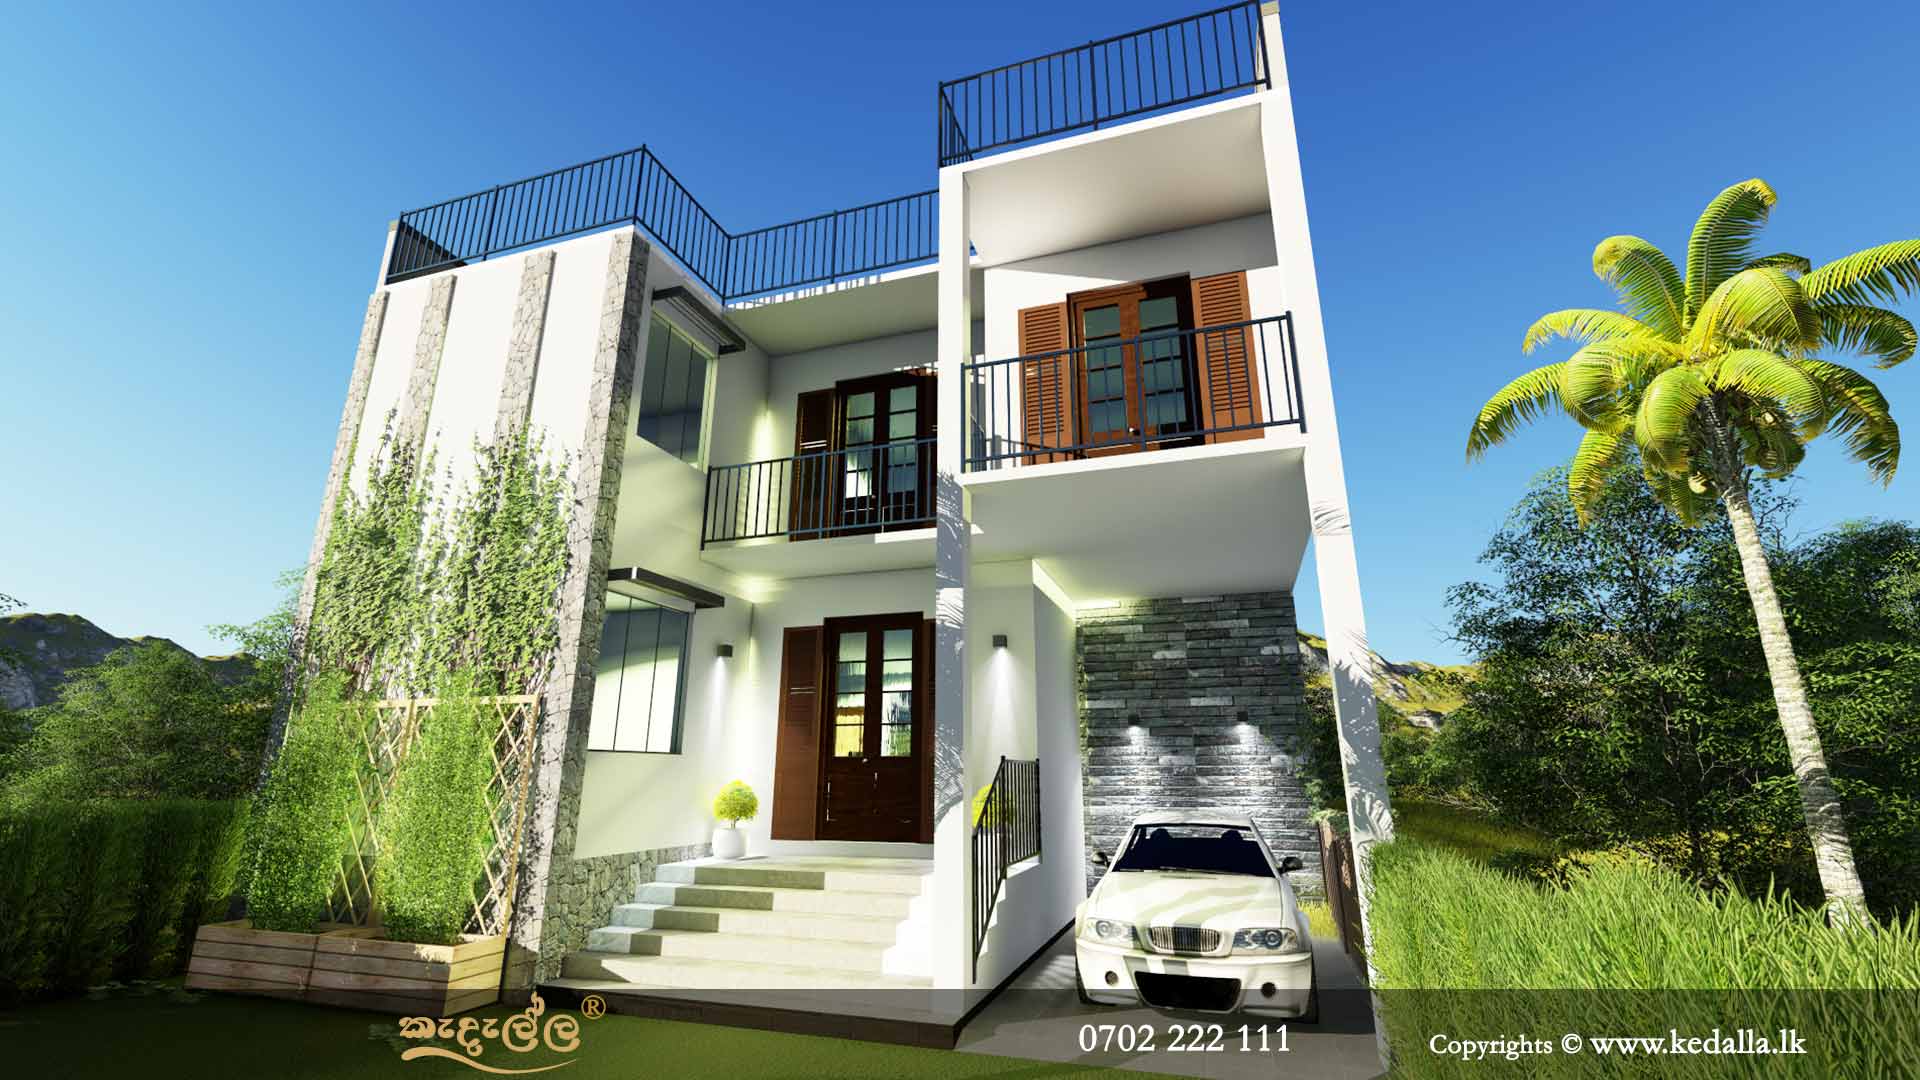 Luxury Box Type Modern House Plan presents rectangular shapes, flat roof terrace, large windows and doors